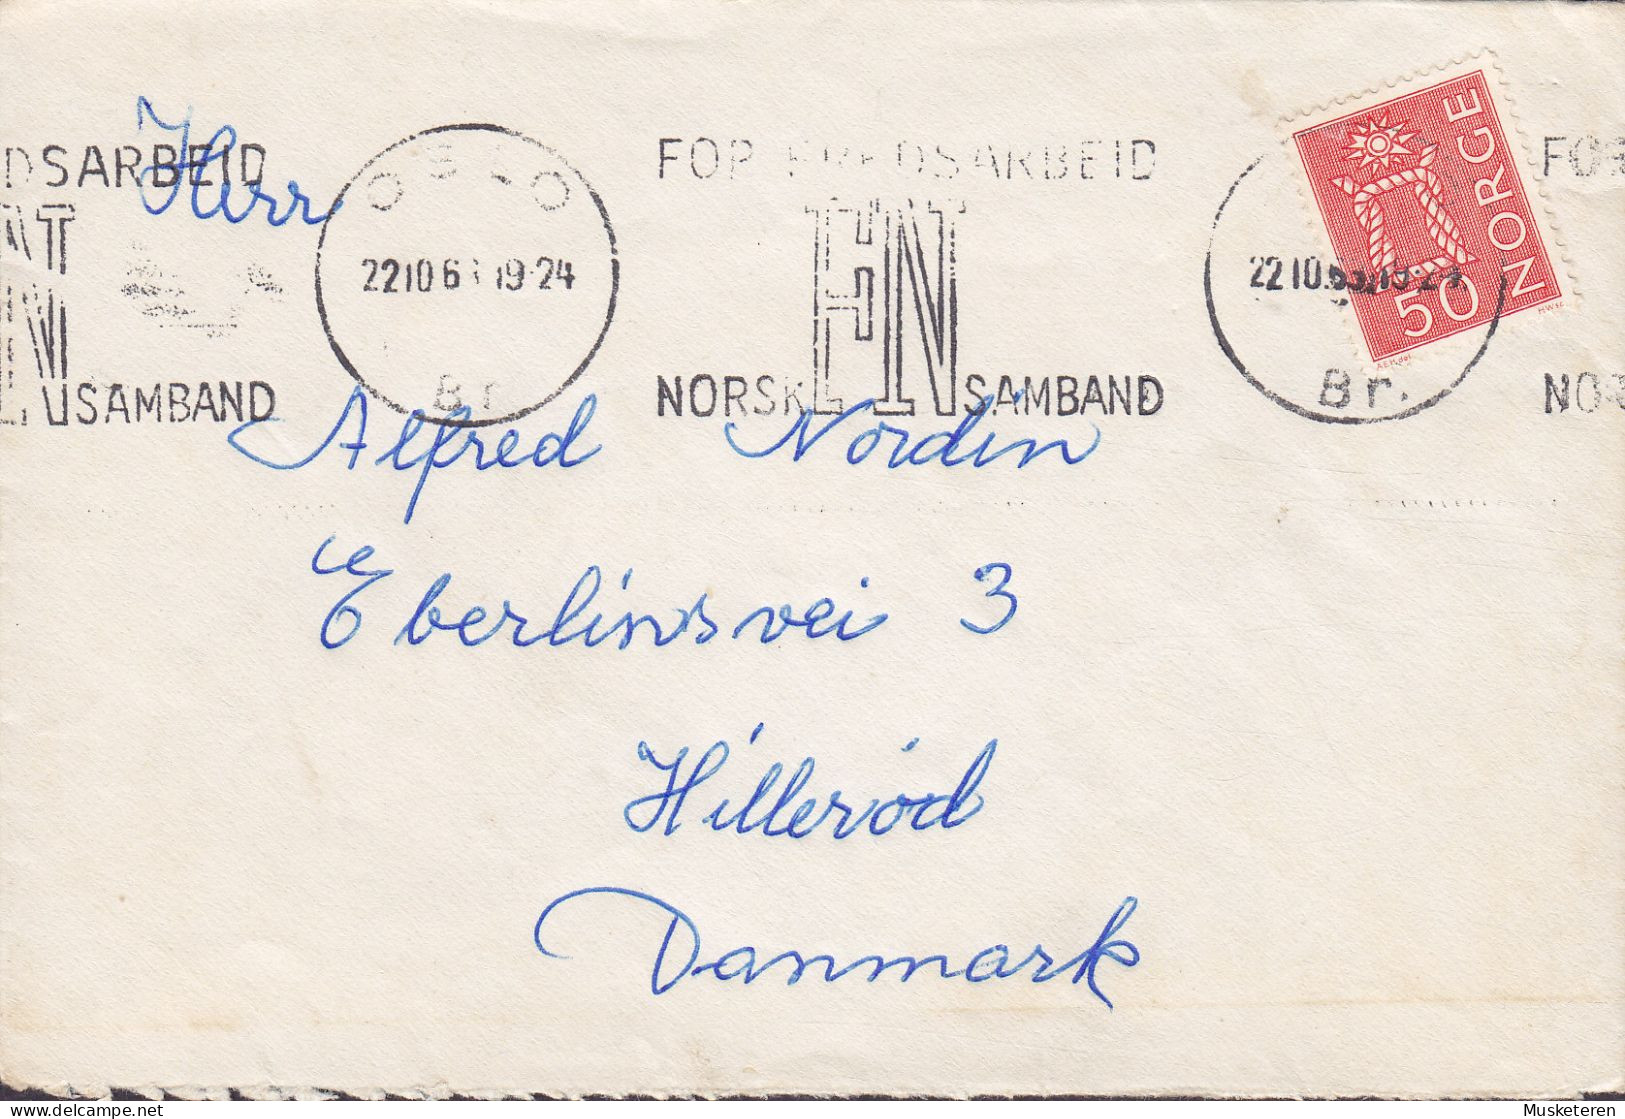 Norway Slogan 'For Fredsarbeid FN Norske Samband' OSLO 1965? 'Petite' Cover Brief Lettre HILLERØD Denmark - Cartas & Documentos